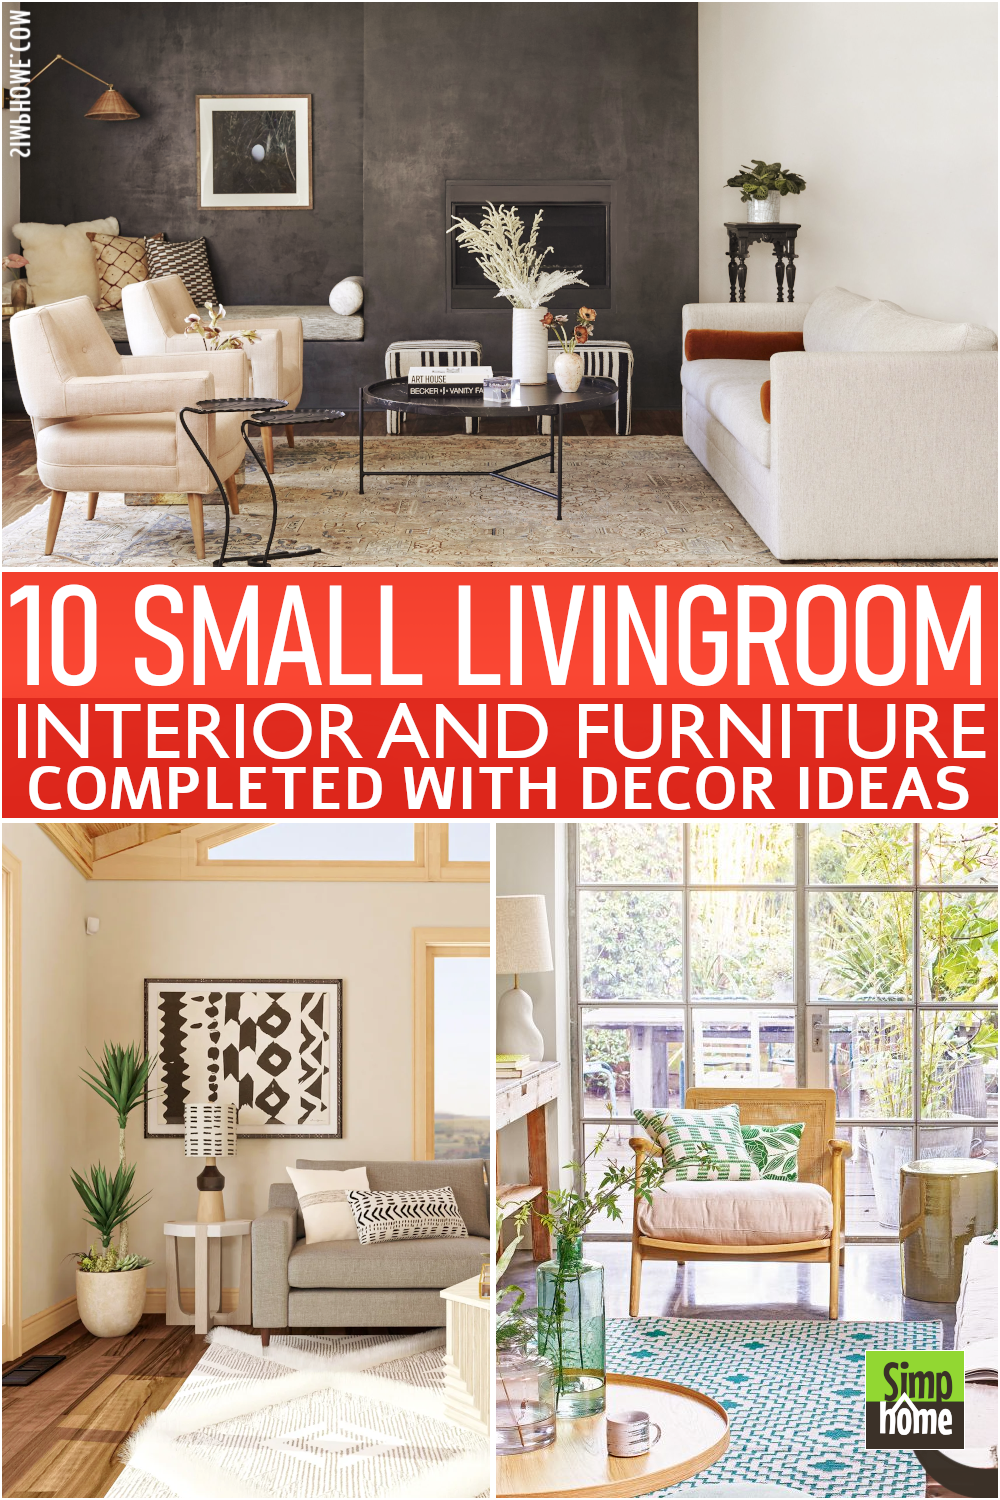 10 Small Living Room Interior and Furniture Update via Simphome.com